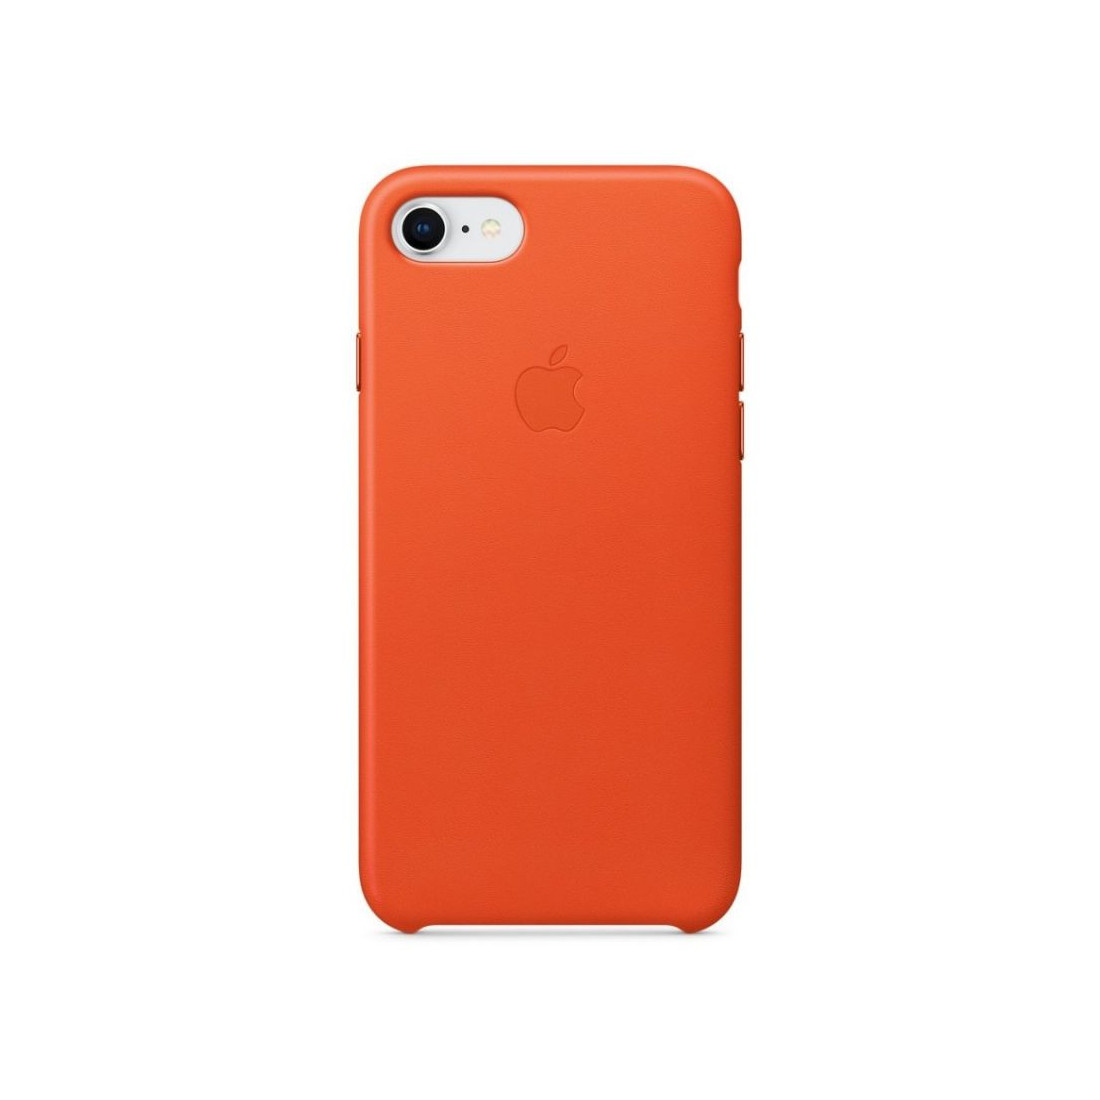 CARCASA IPHONE 8 – Orange Store